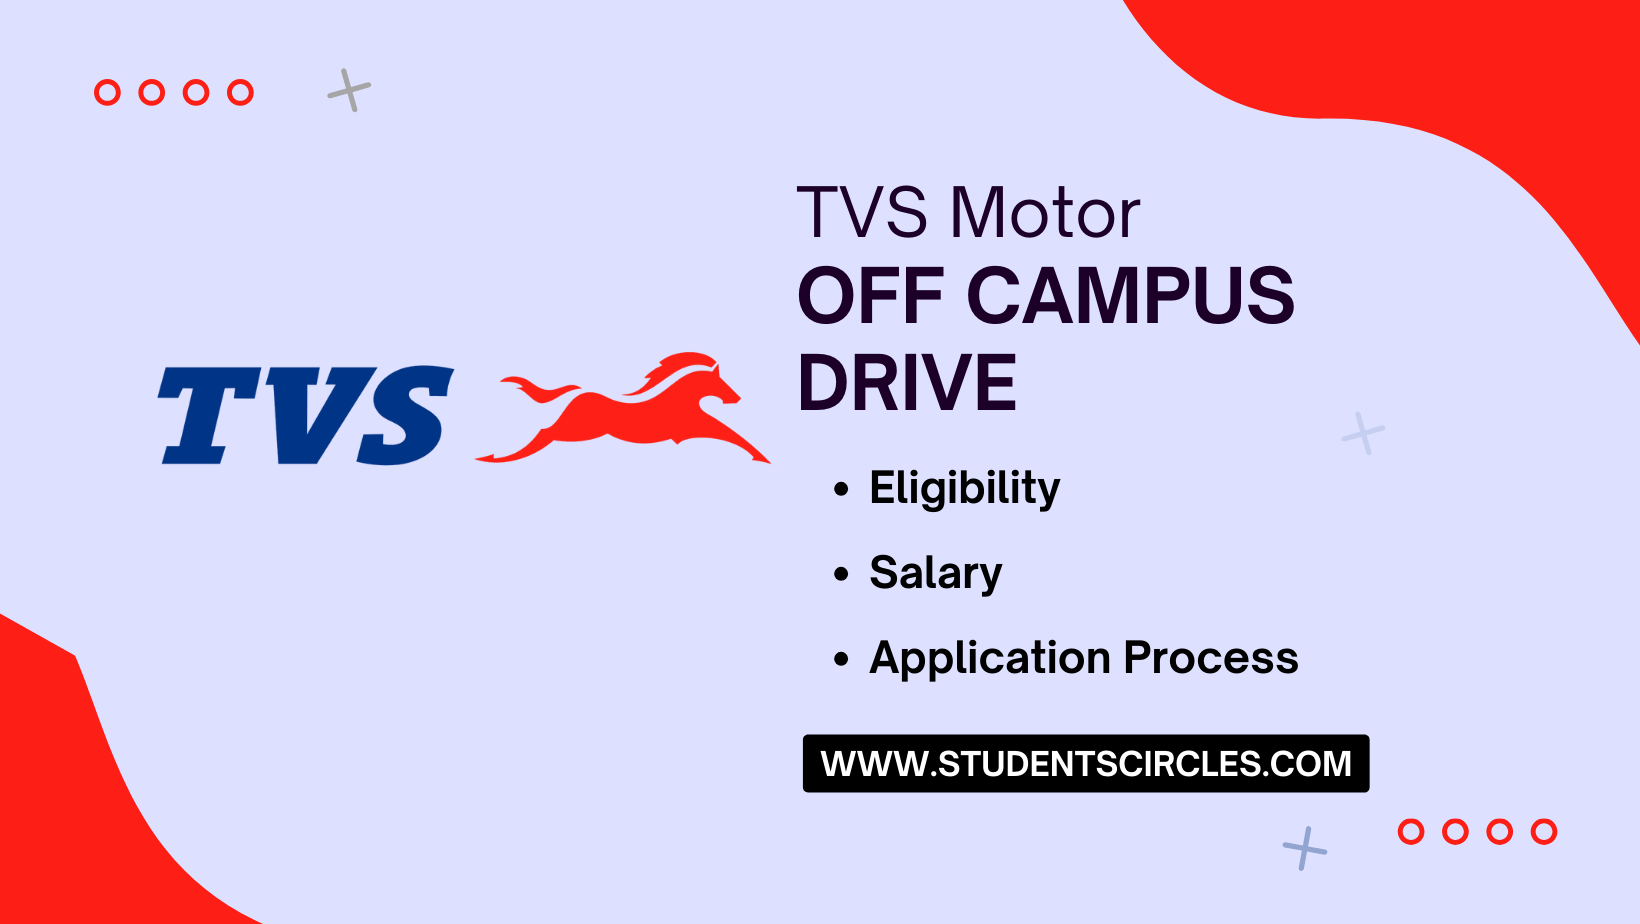 TVS Motor Off Campus Drive